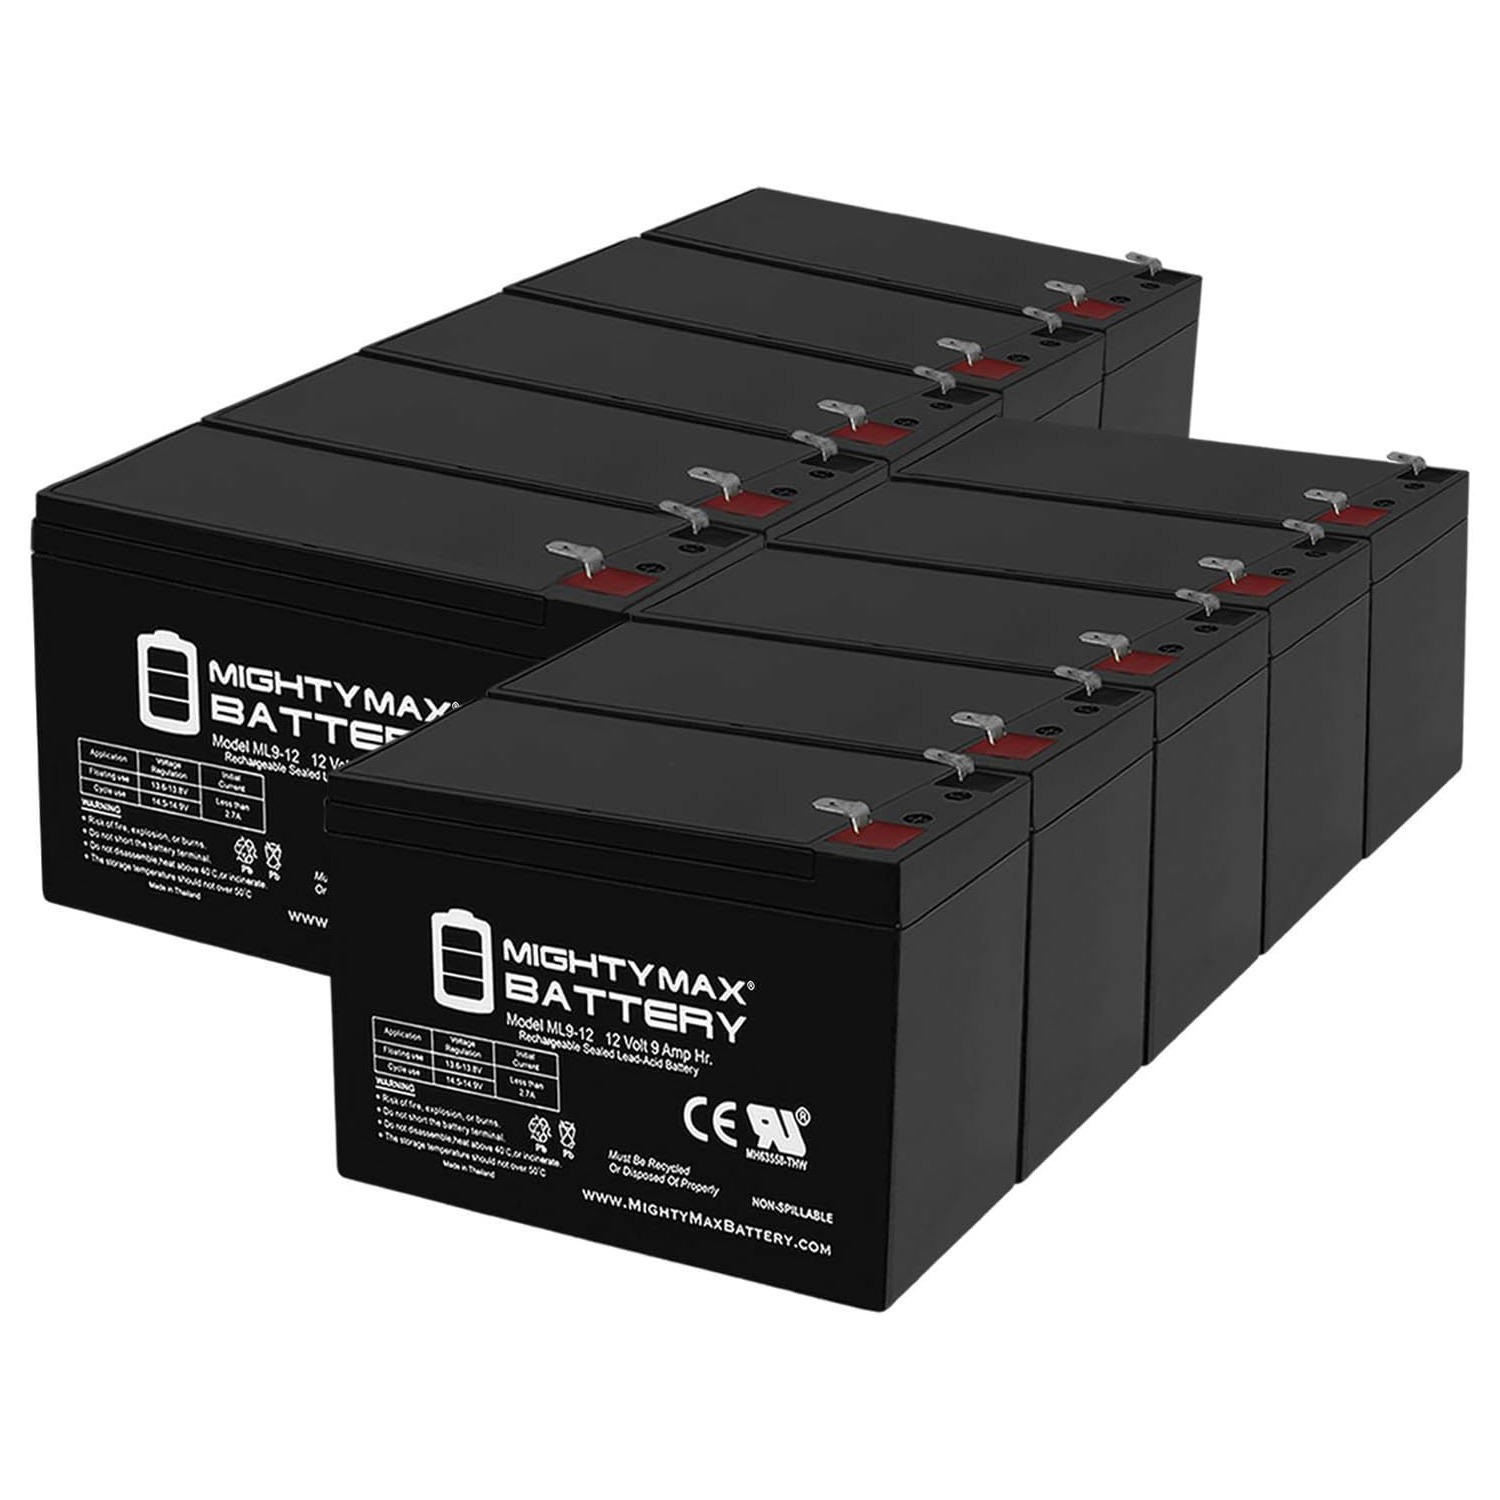 Altronix SMP7PMP16 12V, 9Ah Lead Acid Battery - 10 Pack